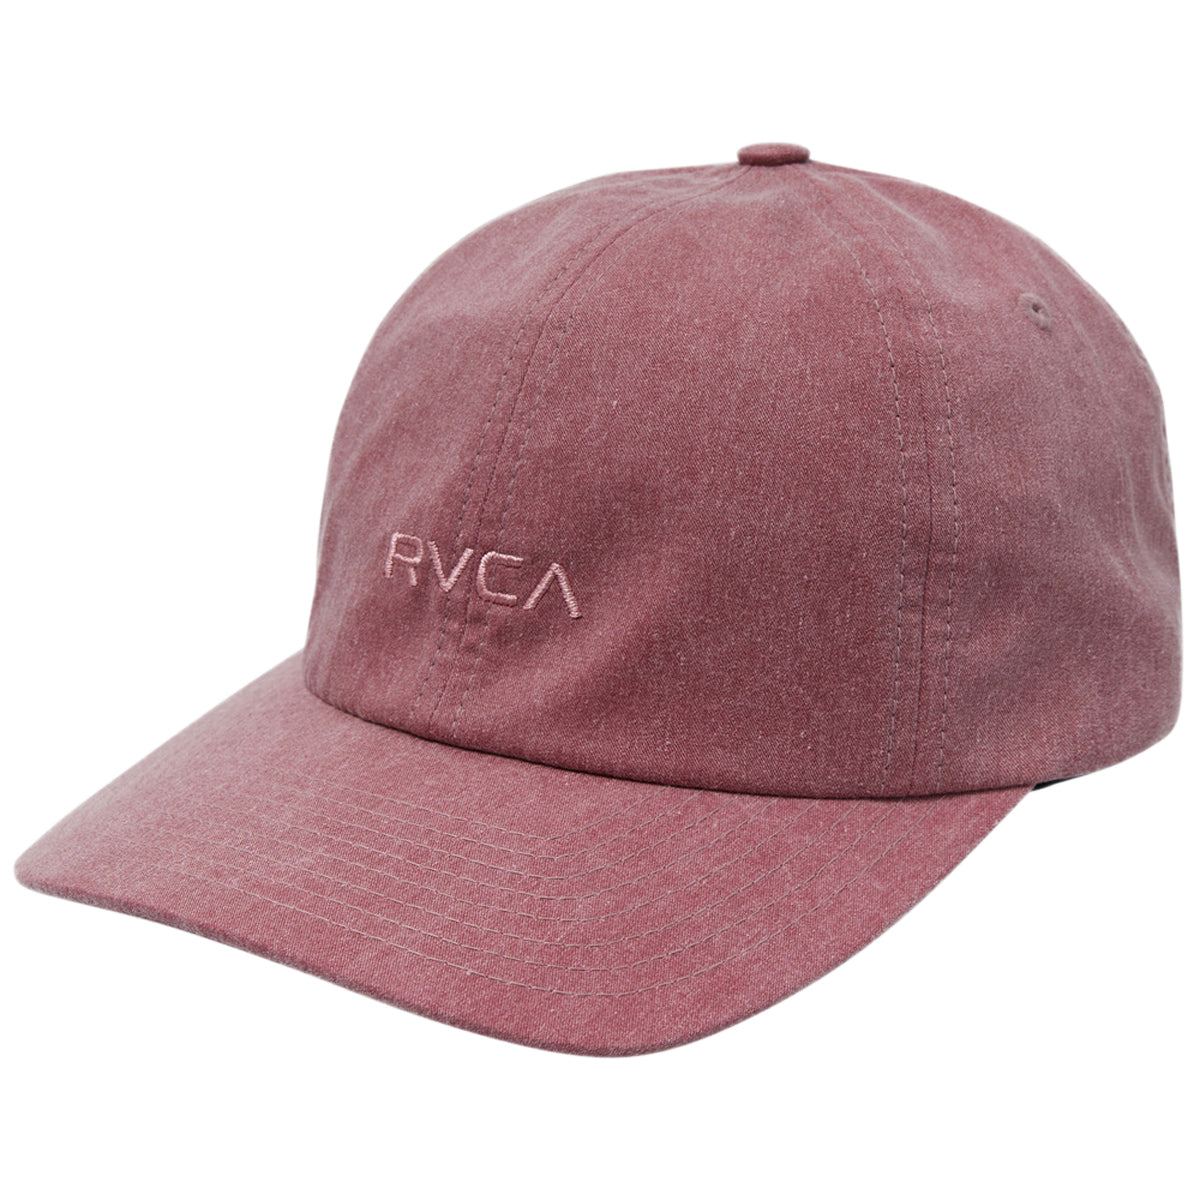 RVCA Ptc Six Panel Hat - Oxblood Red image 1